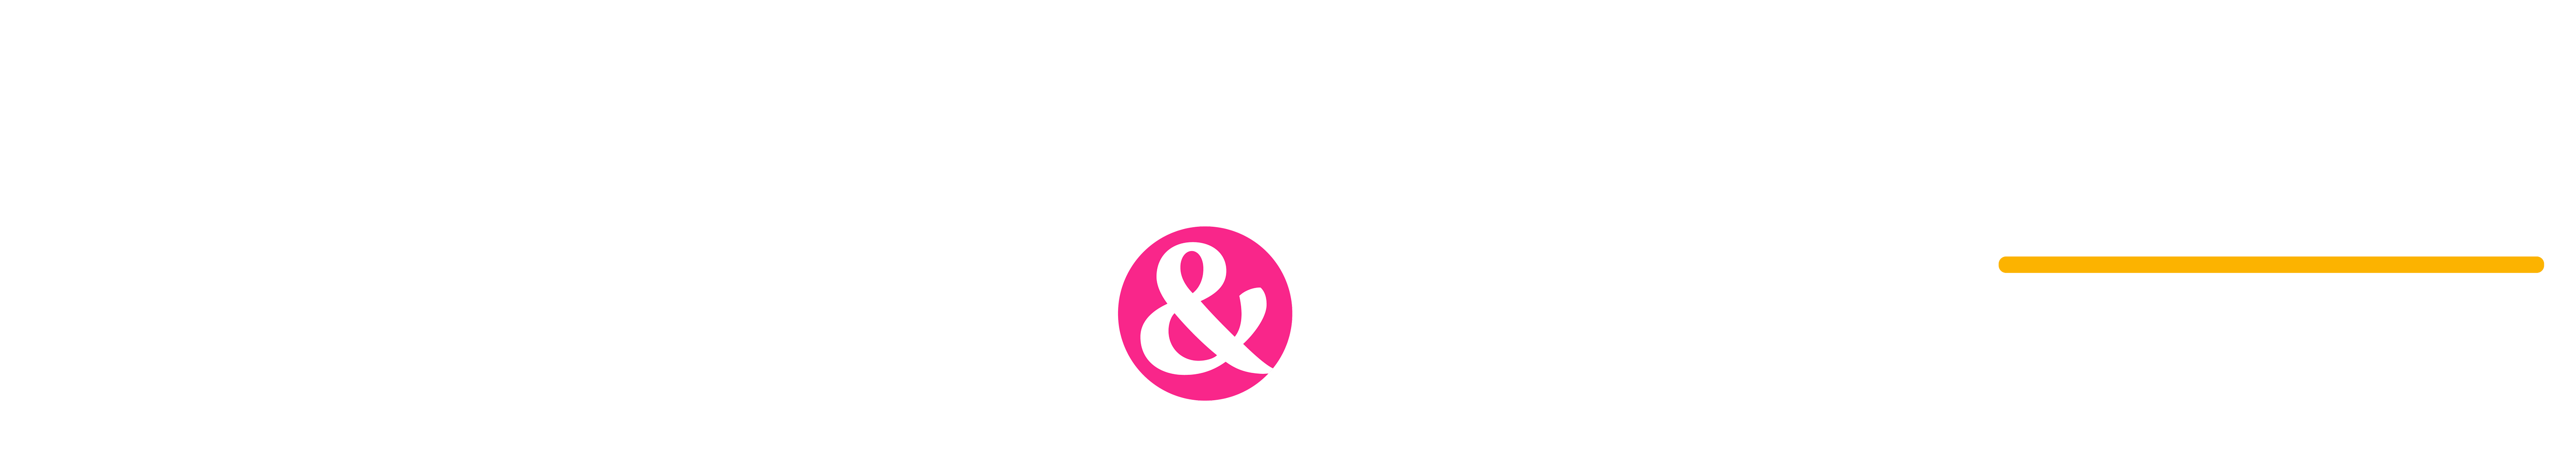 On demand logo & icon